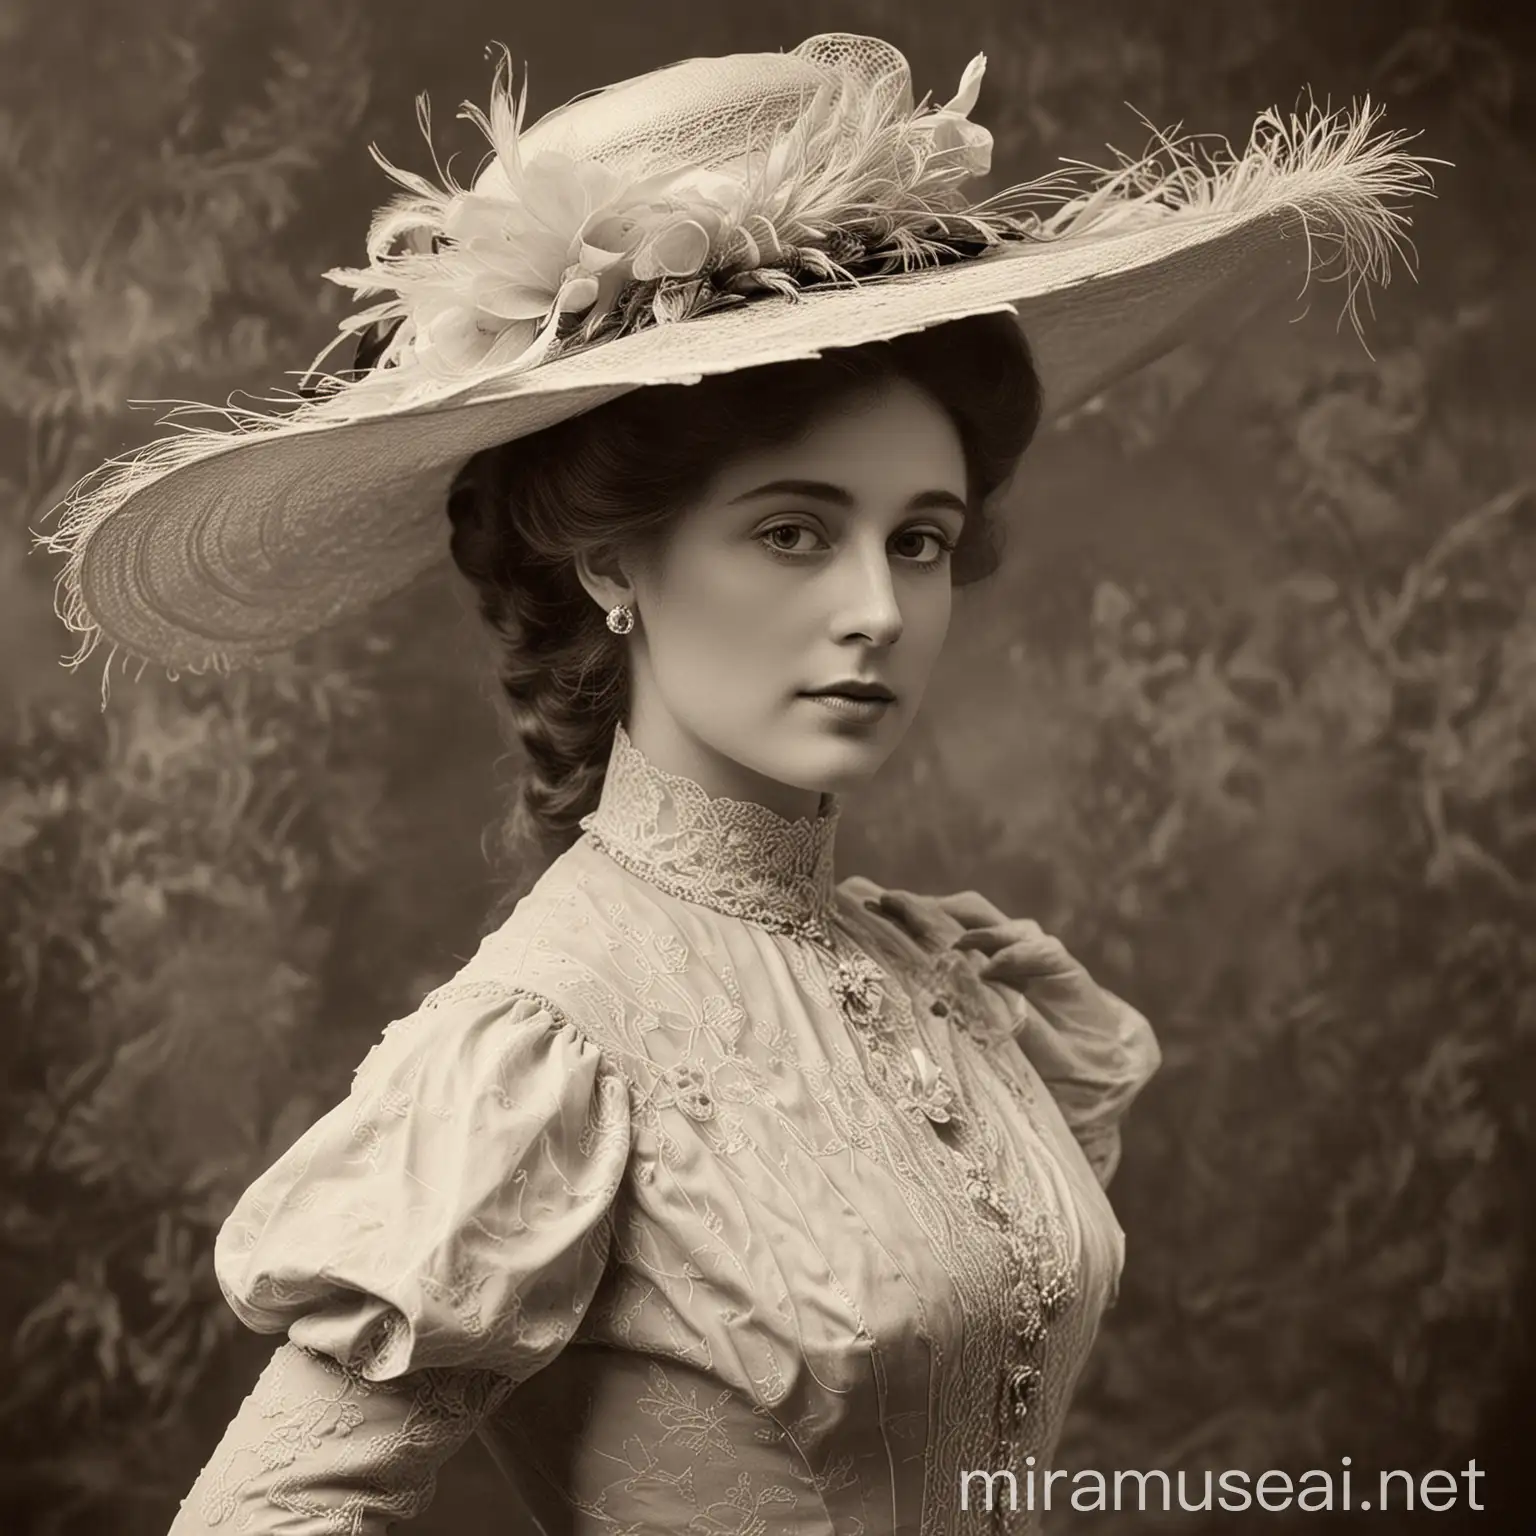 Elegant Edwardian Woman in Vintage HighNecked Dress and Large Hat